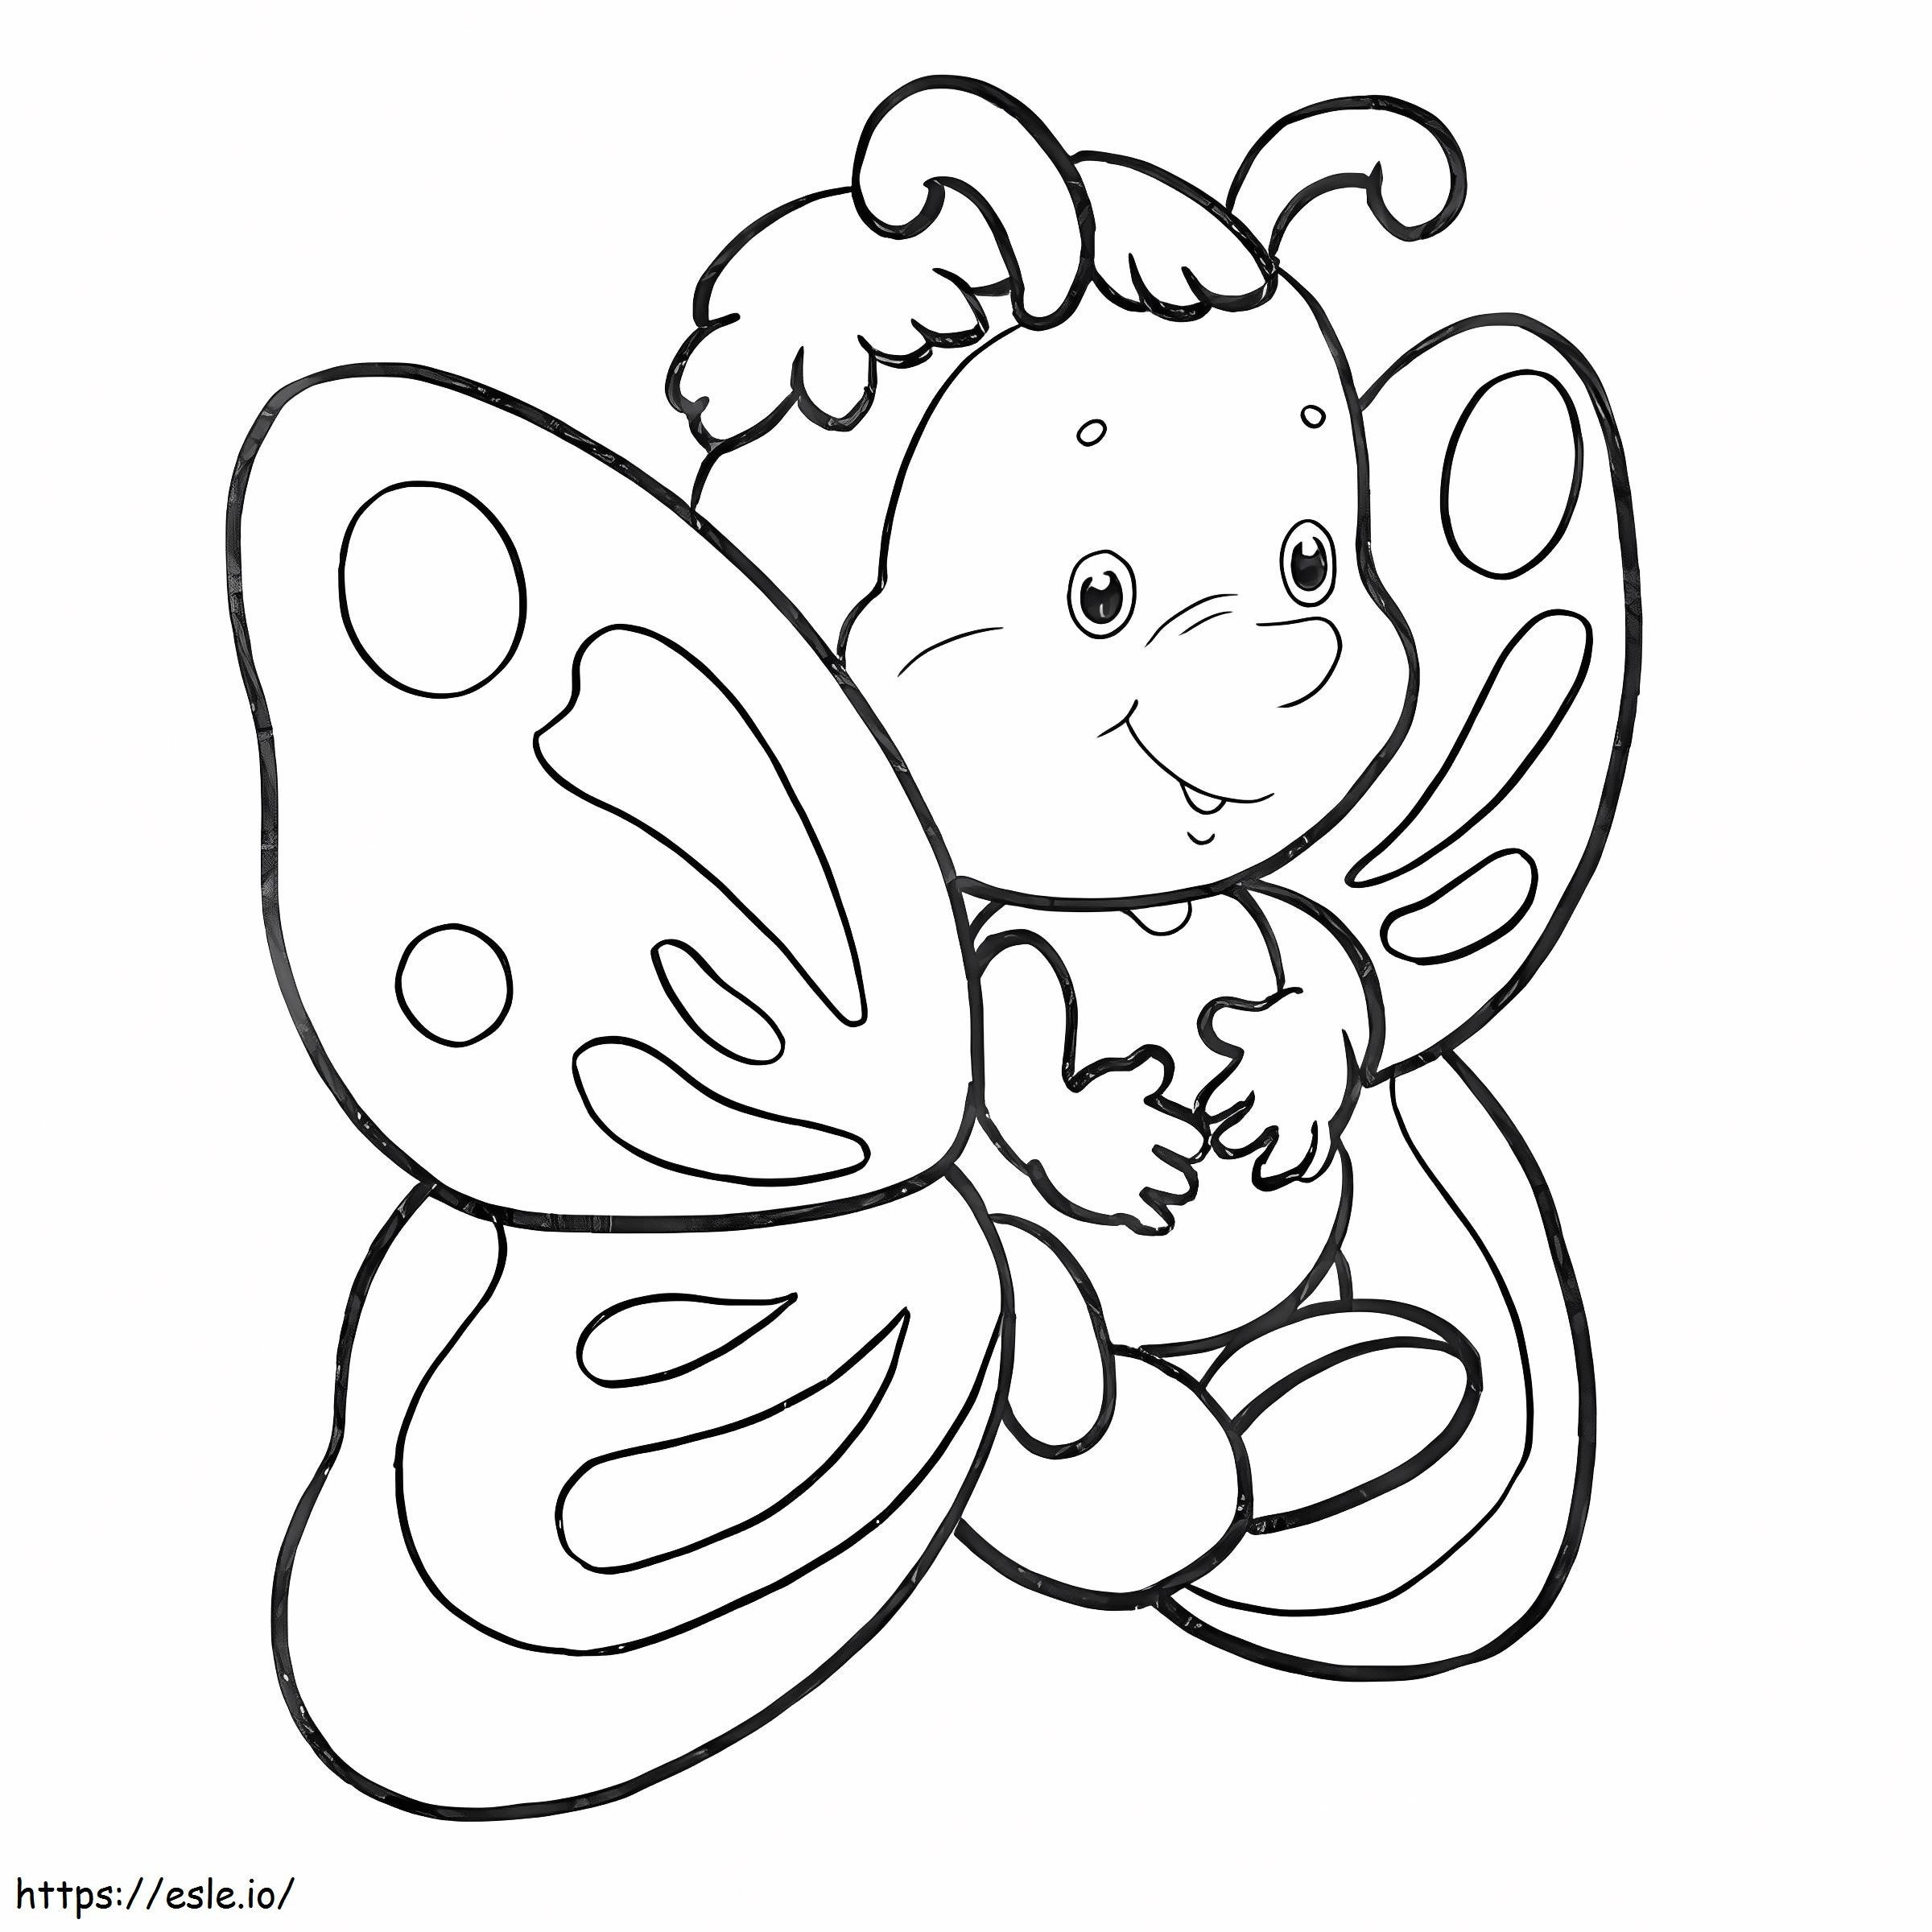 Desenho de borboleta gorda para colorir